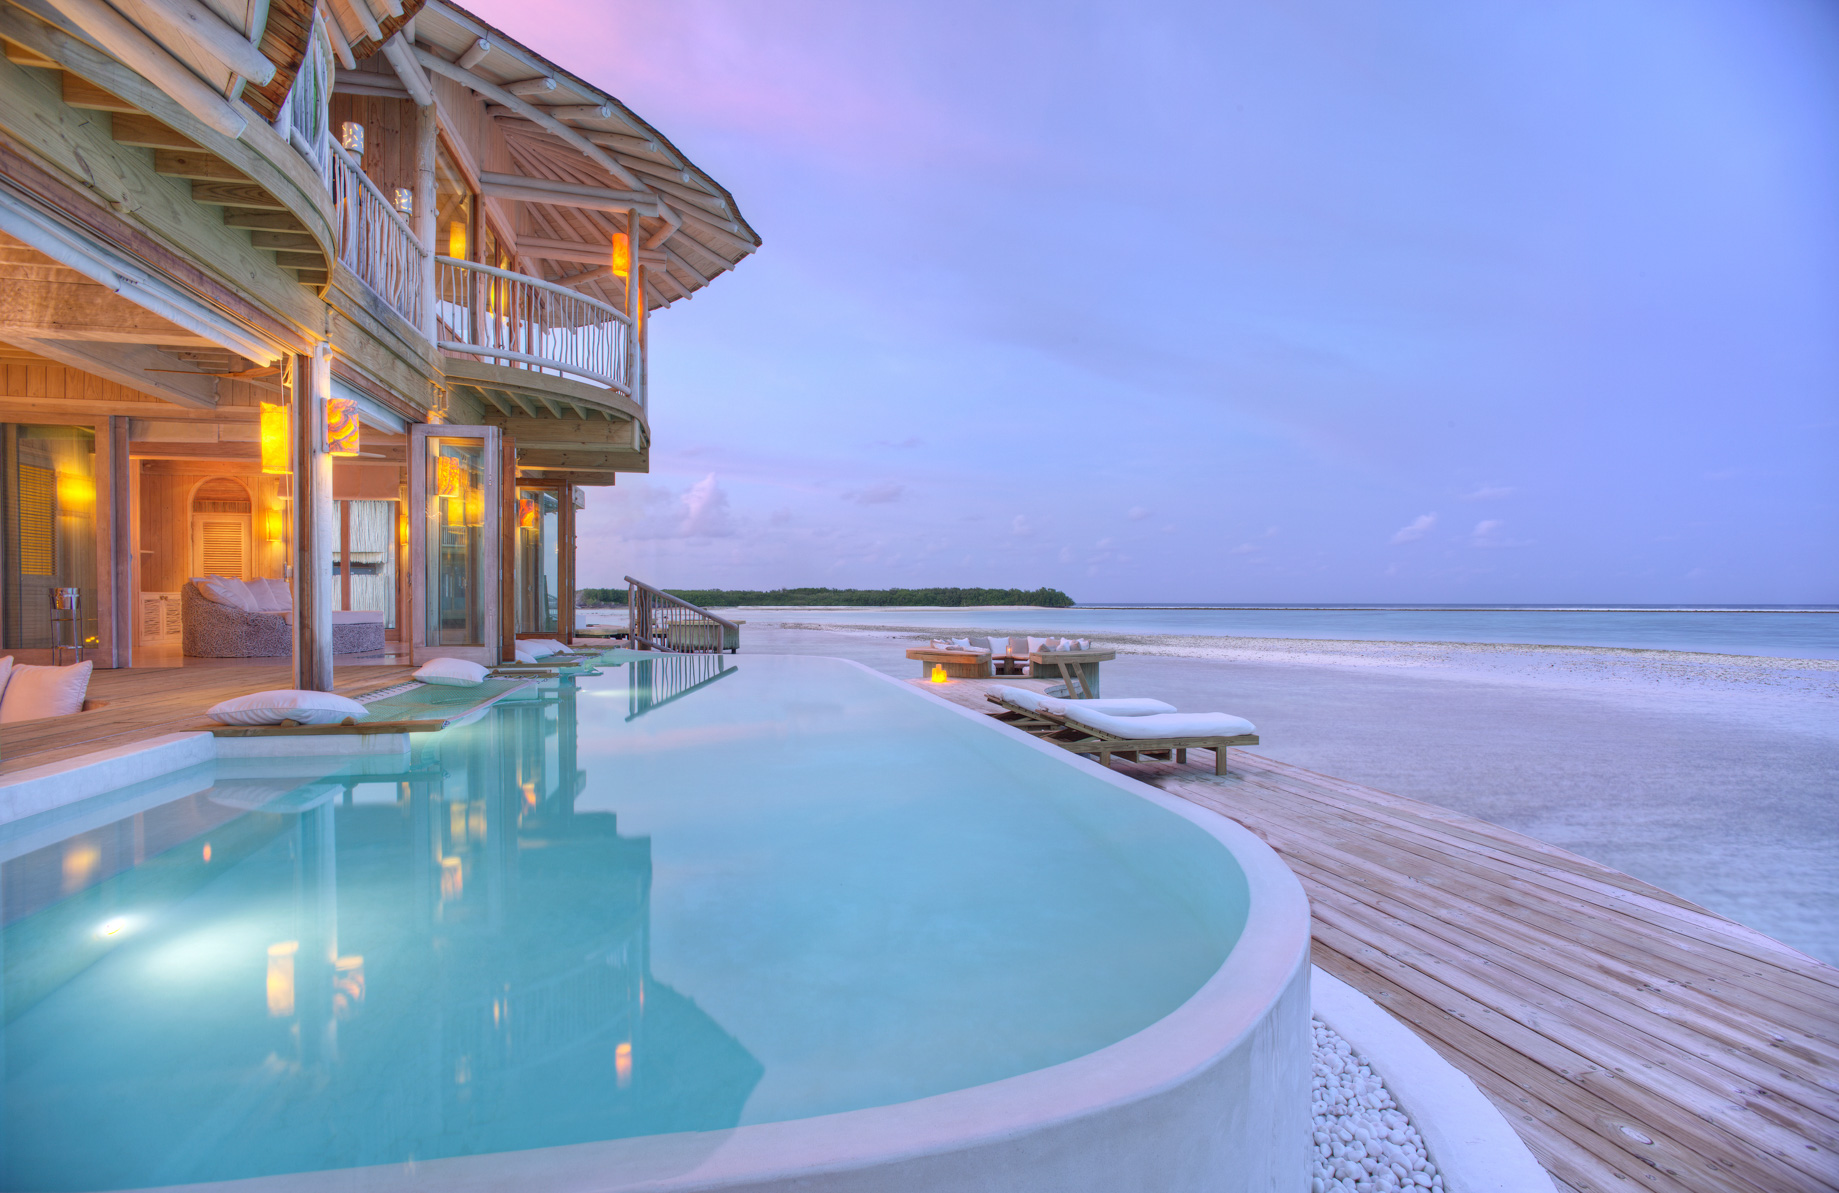 Soneva Jani Resort – Noonu Atoll, Medhufaru, Maldives – Overwater Villa Pool Deck Sunset